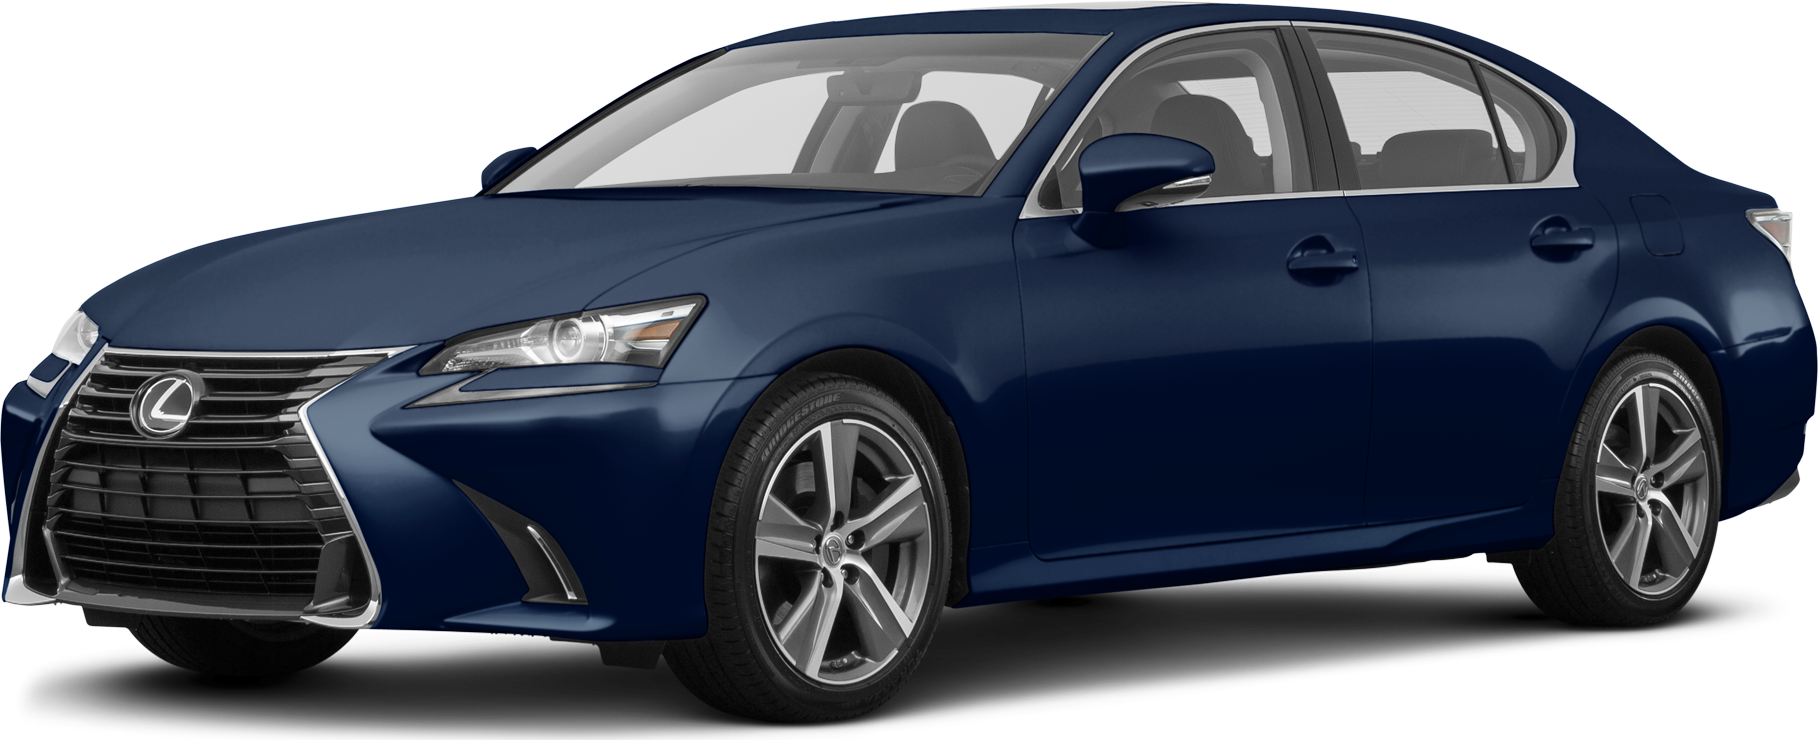 2017 Lexus Gs Value Ratings